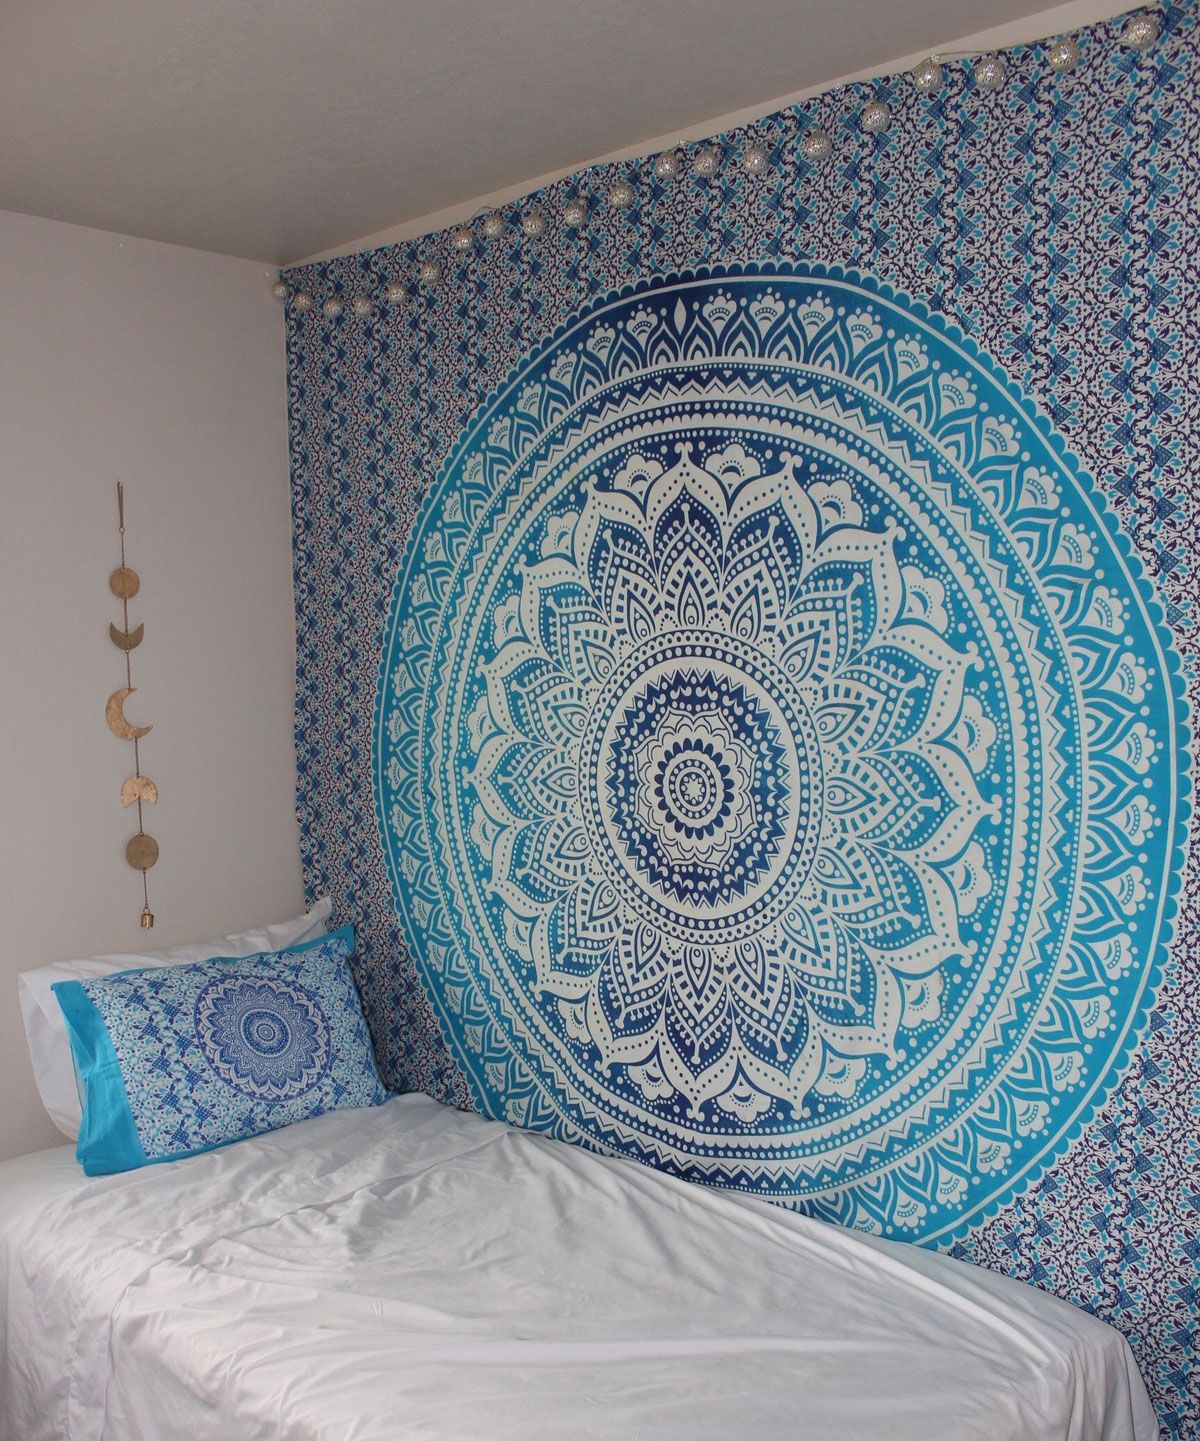 wallpaper for bedroom walls india,bedroom,blue,room,property,wall